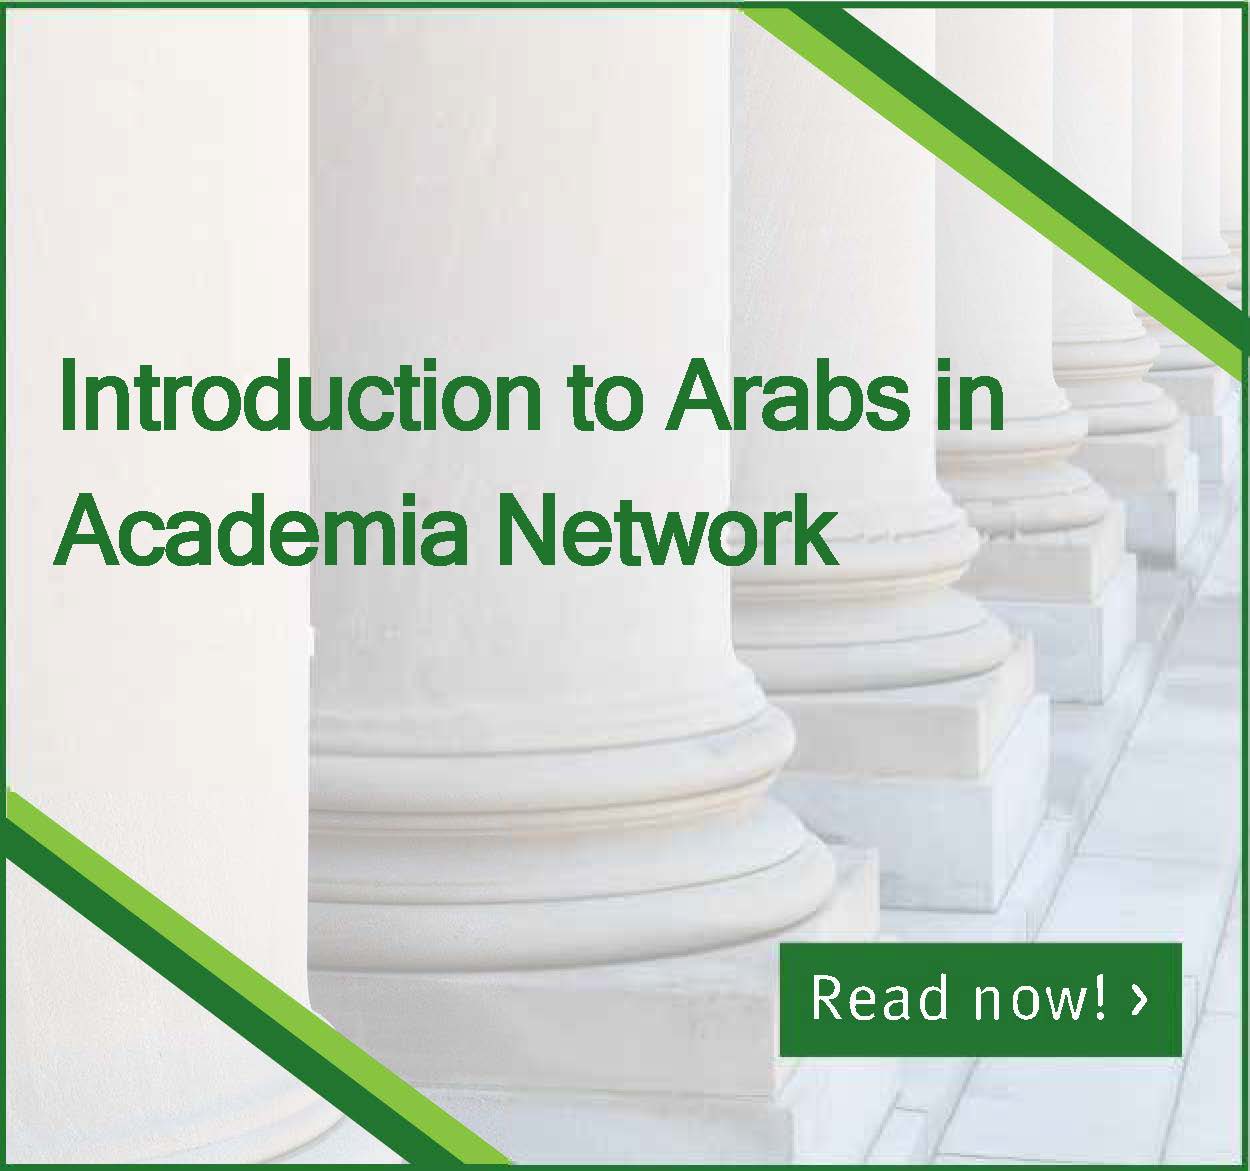 Arabs in Academia Network